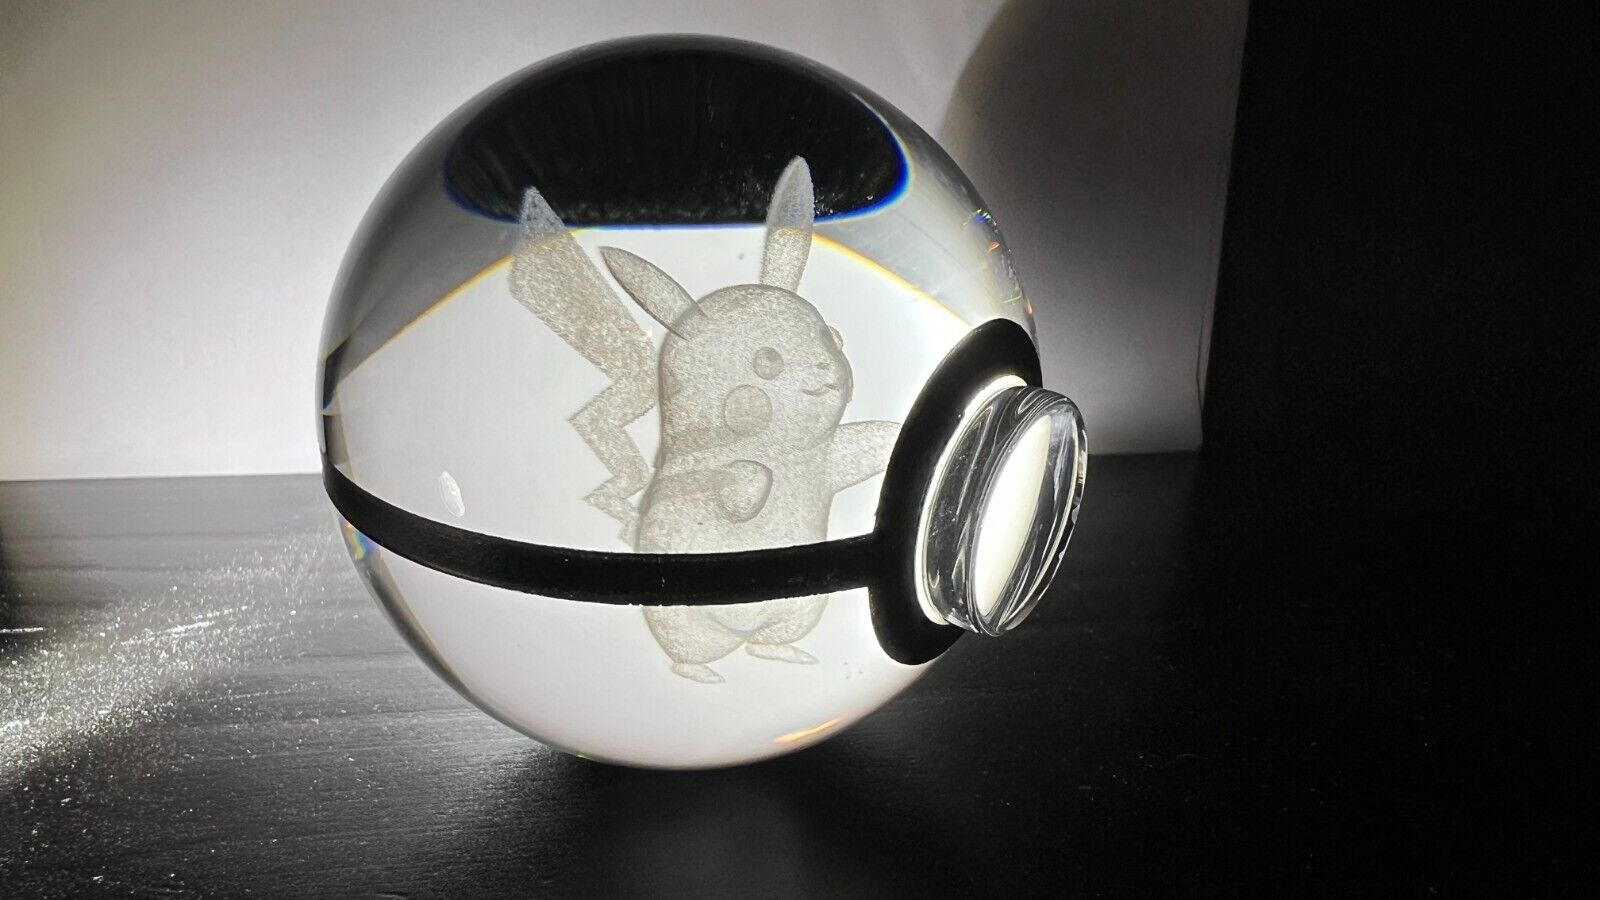 Pikachu 3D Laser Crystal Pokeball Ball Pokemon Gift